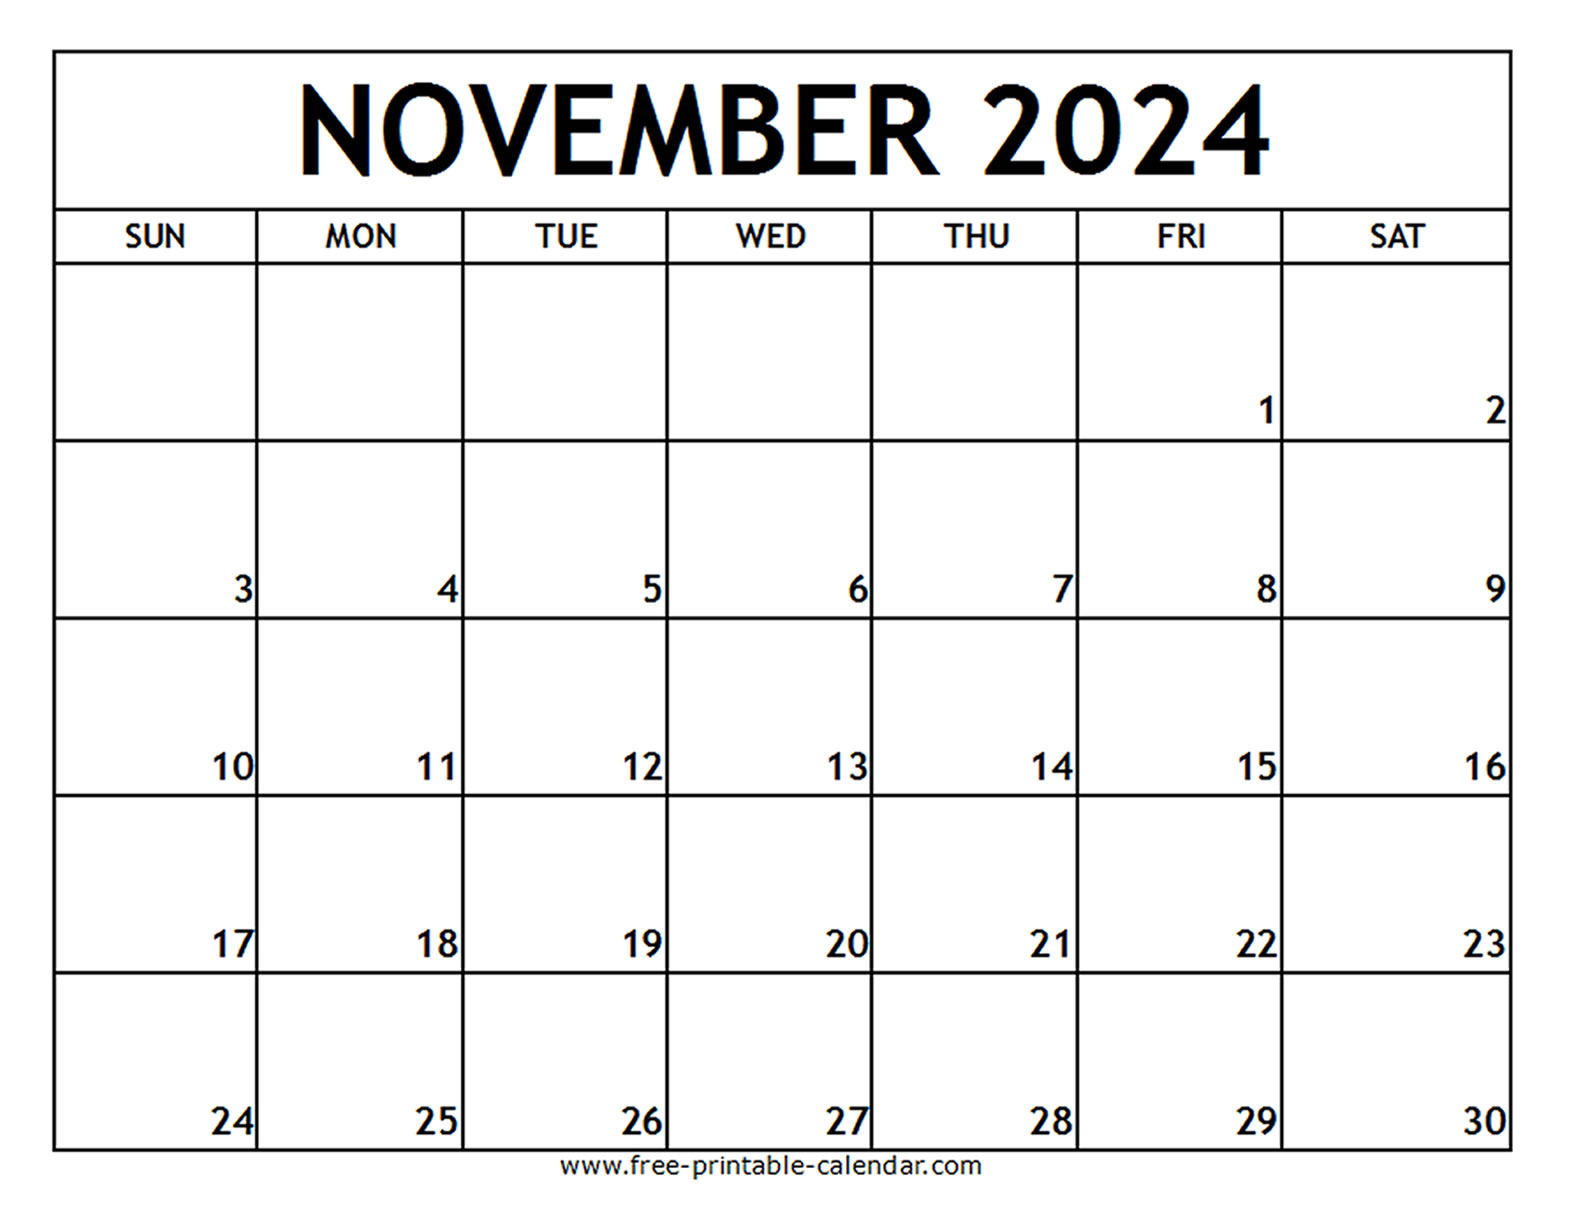 November 2024 Printable Calendar - Free-Printable-Calendar | Nov 2024 Calendar Printable Free